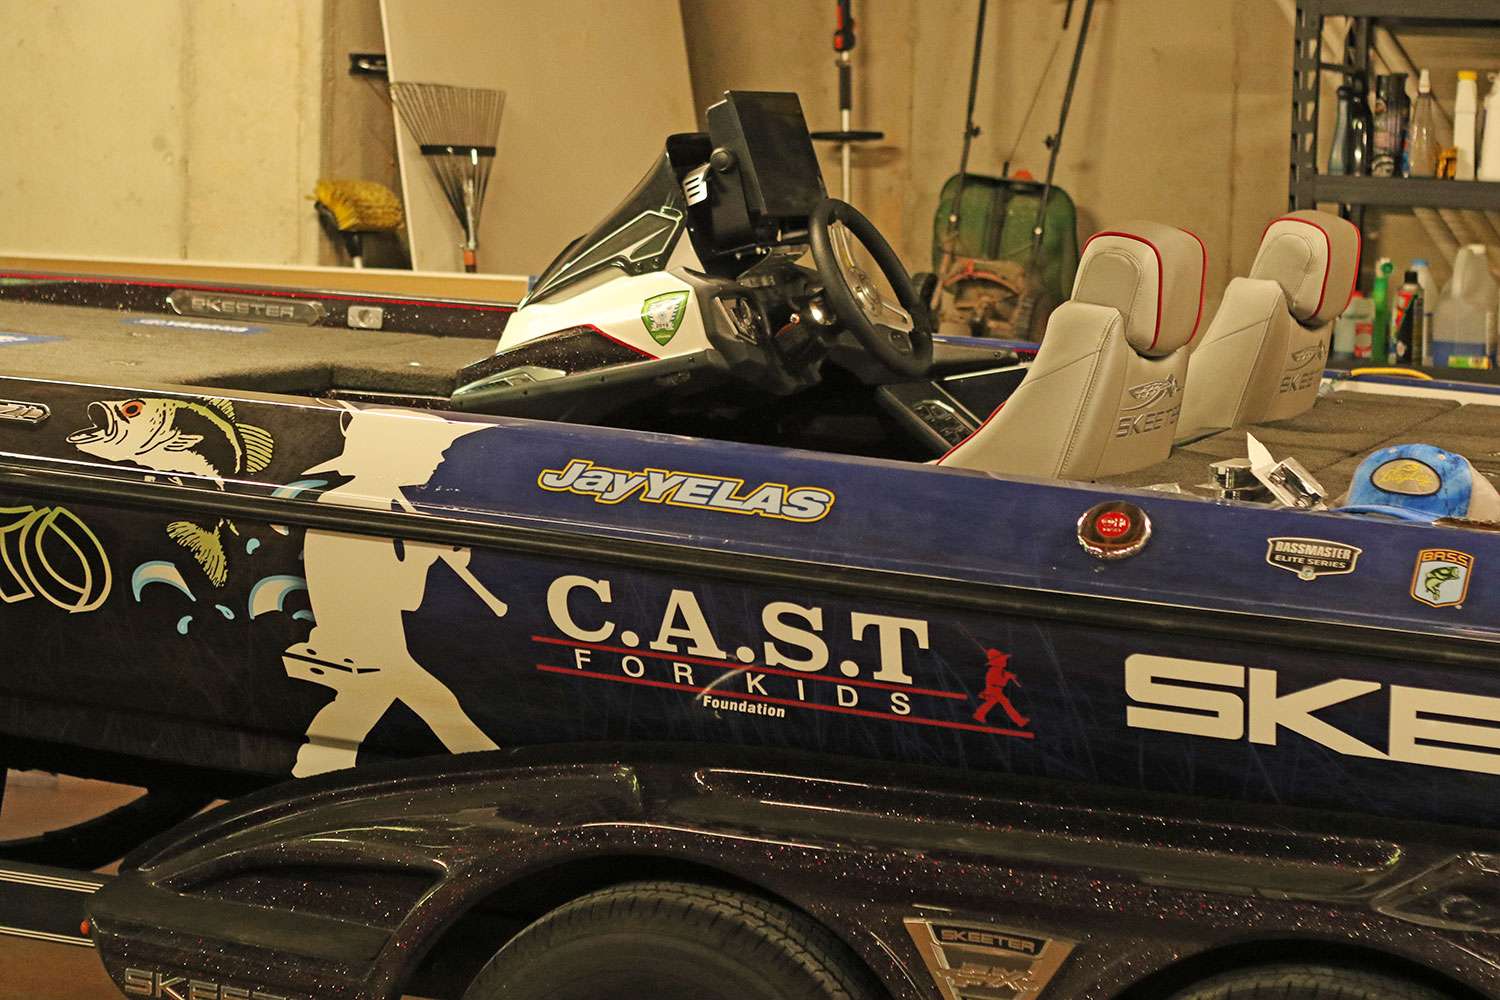 Jay Yelas has kept his boat at Canterbury's between tournaments. Yelas lives in Oregon, so it's a big help.